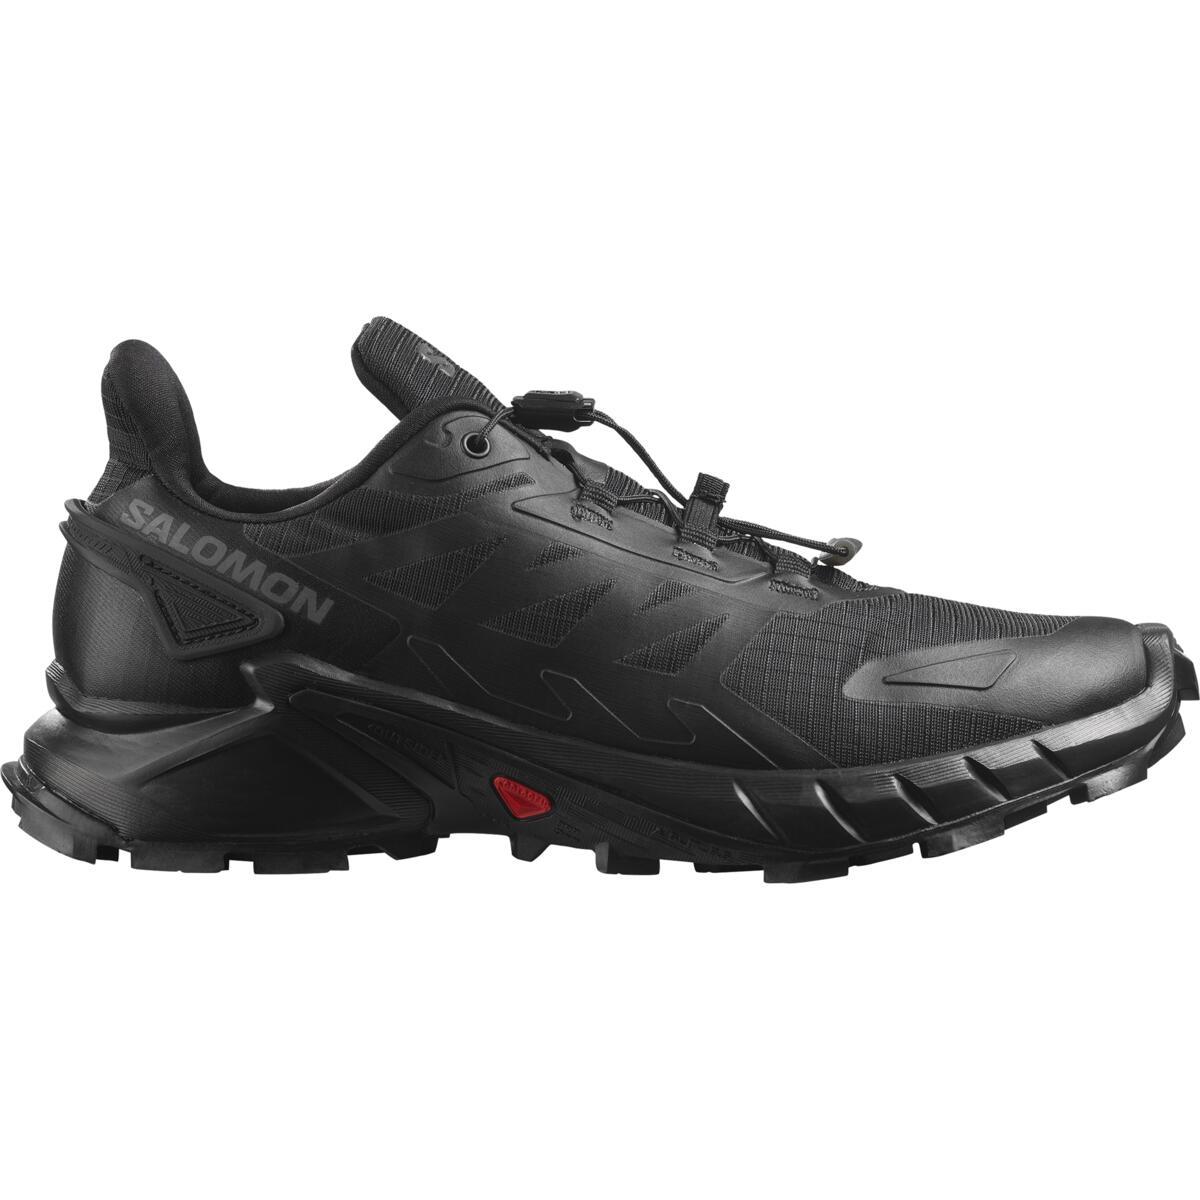 Salomon Womens Supercross 4 Trail Running Shoes - Black/black/black